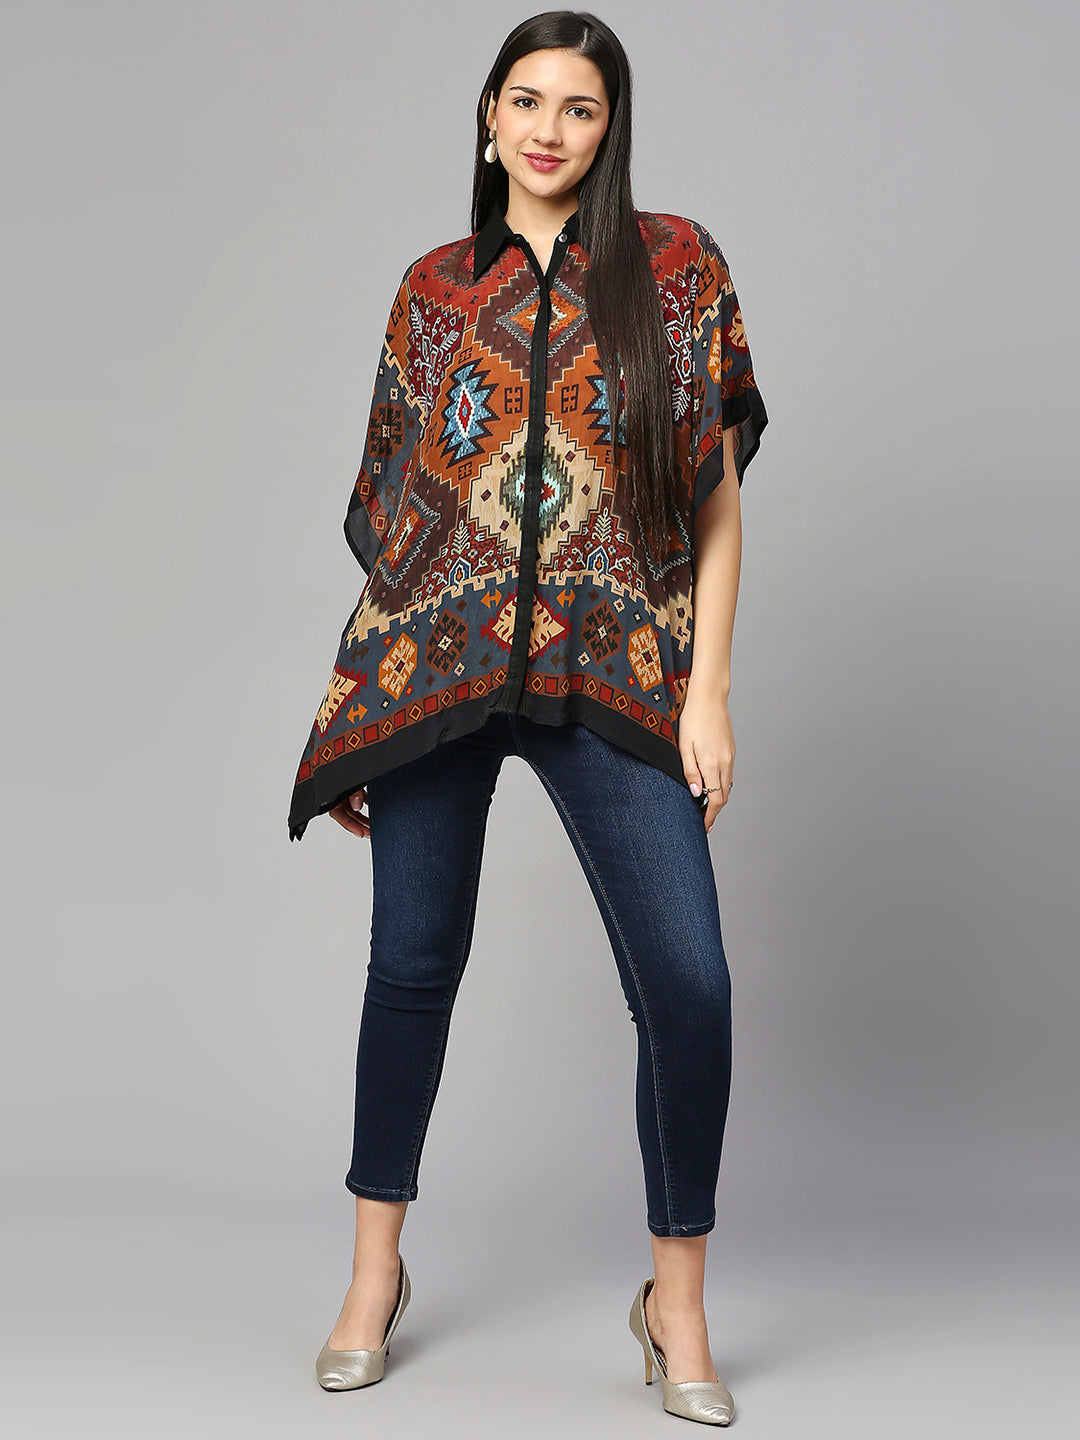 Multicolored Kilim Printed Kaftan Shirt